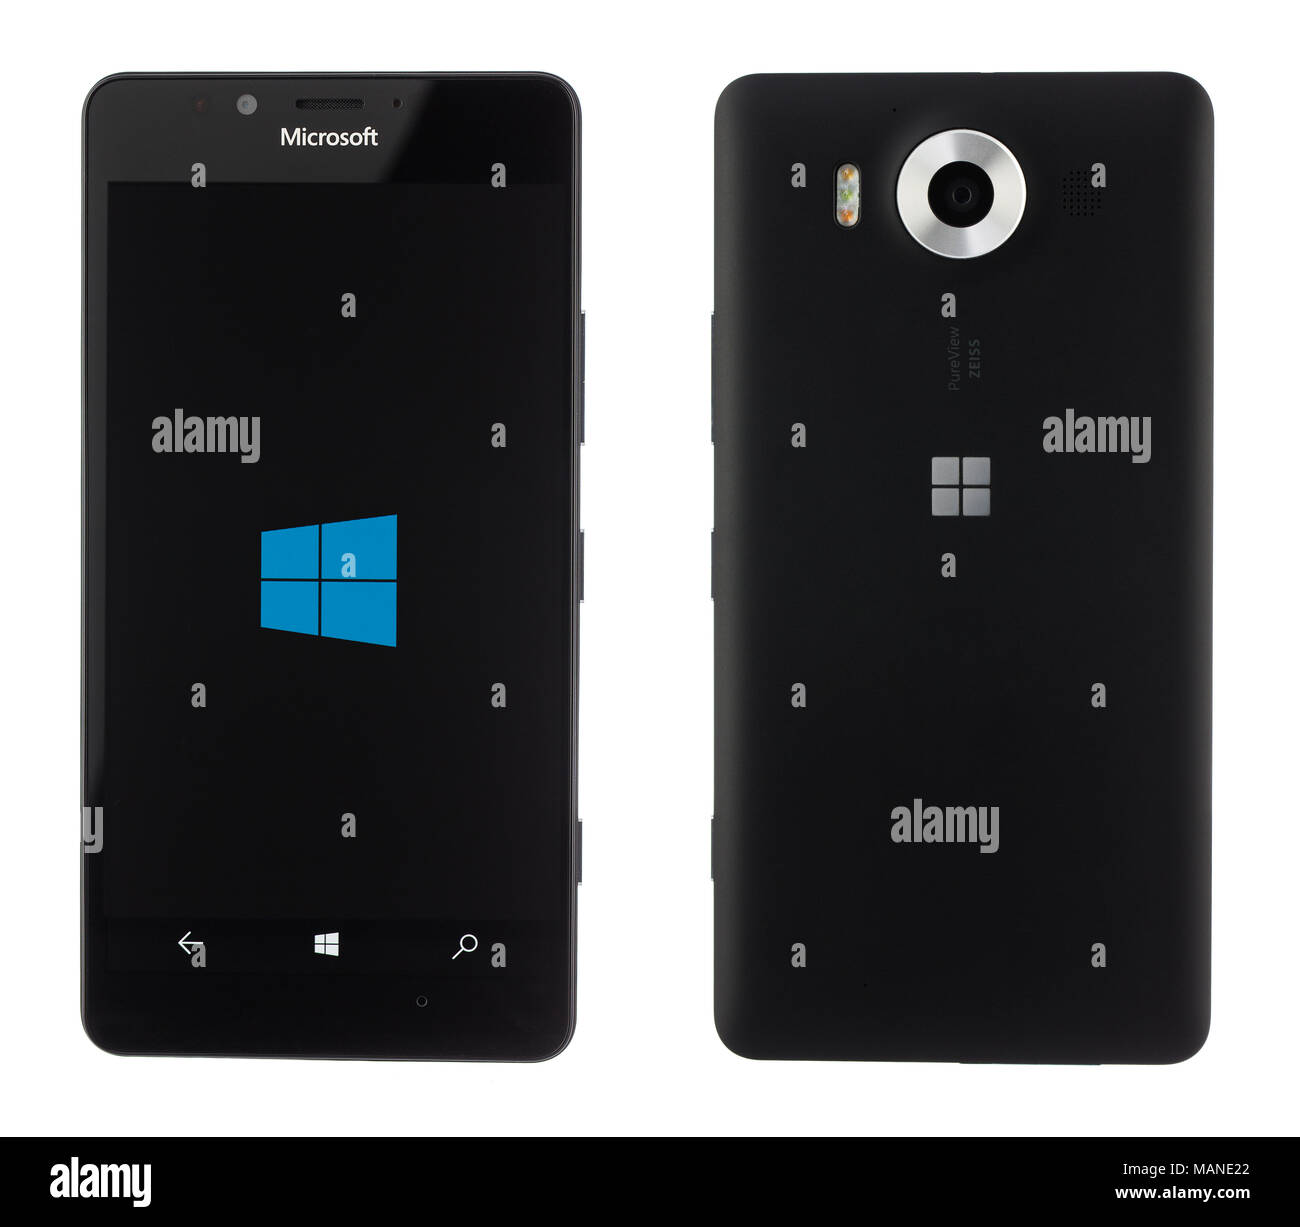 Varna, Bulgarien - Dezember 10, 2015: Handy Modell Microsoft Lumia 950 hat 20-MP-Kamera, Microsoft Windows 10,, drahtlose Aufladen und Iris scanne Stockfoto